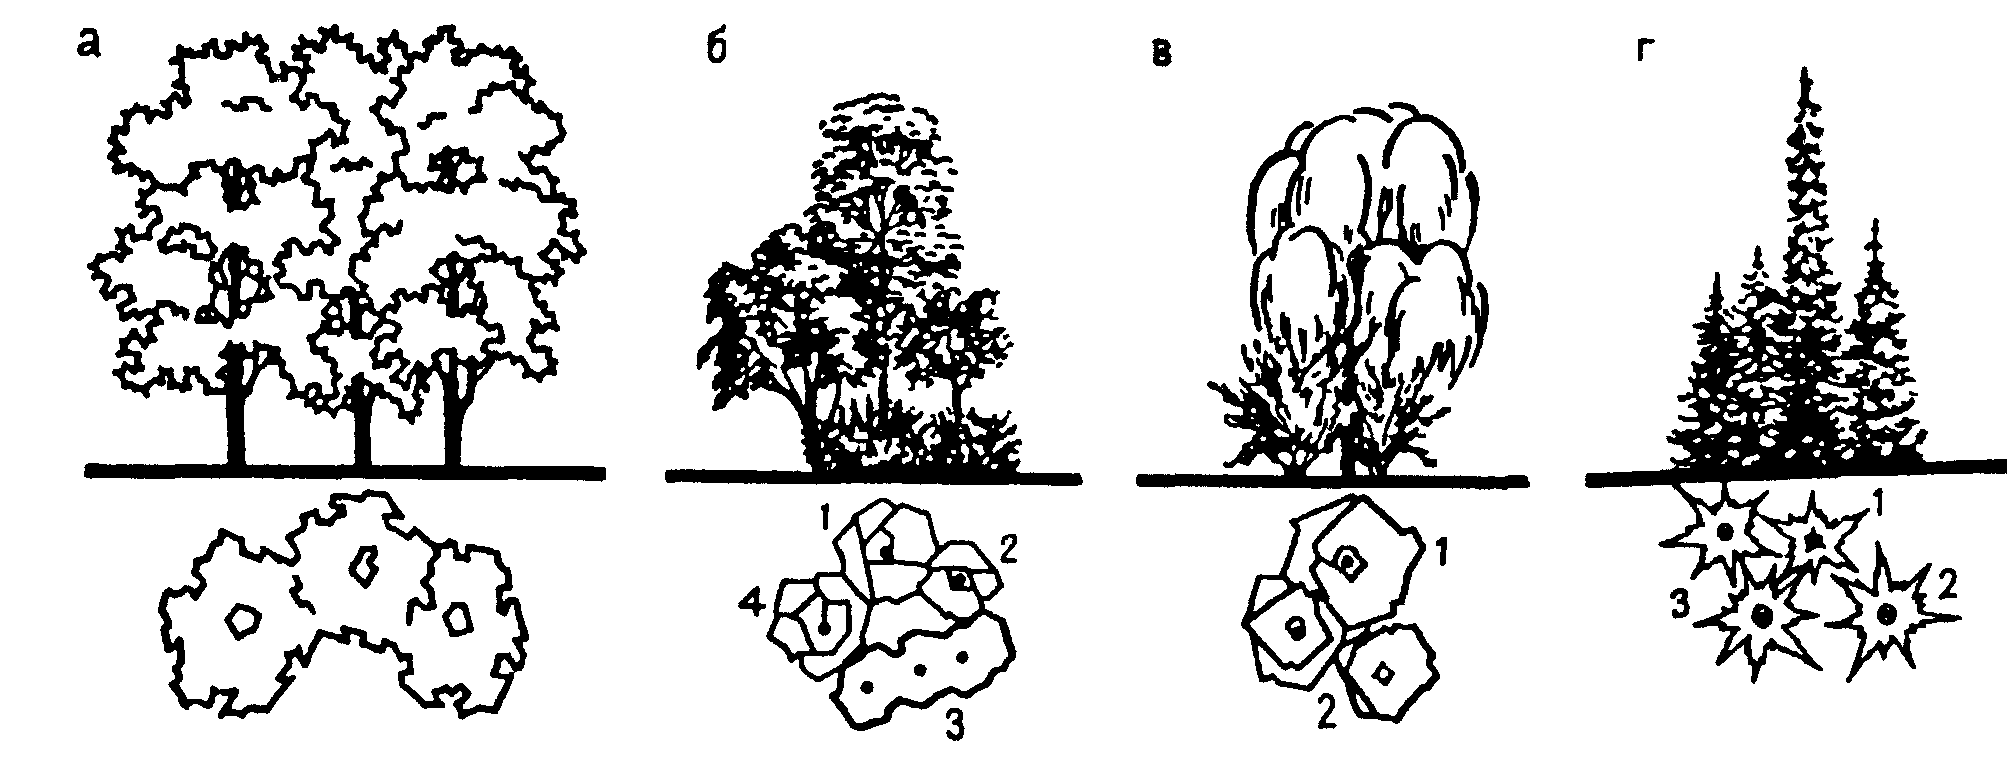 Группа деревьев 7. Схема посадки древесно-кустарниковых. Схема древесно кустарниковых насаждений. Схема посадки древесных насаждений. Композиция древесно кустарниковых насаждений рисунок.